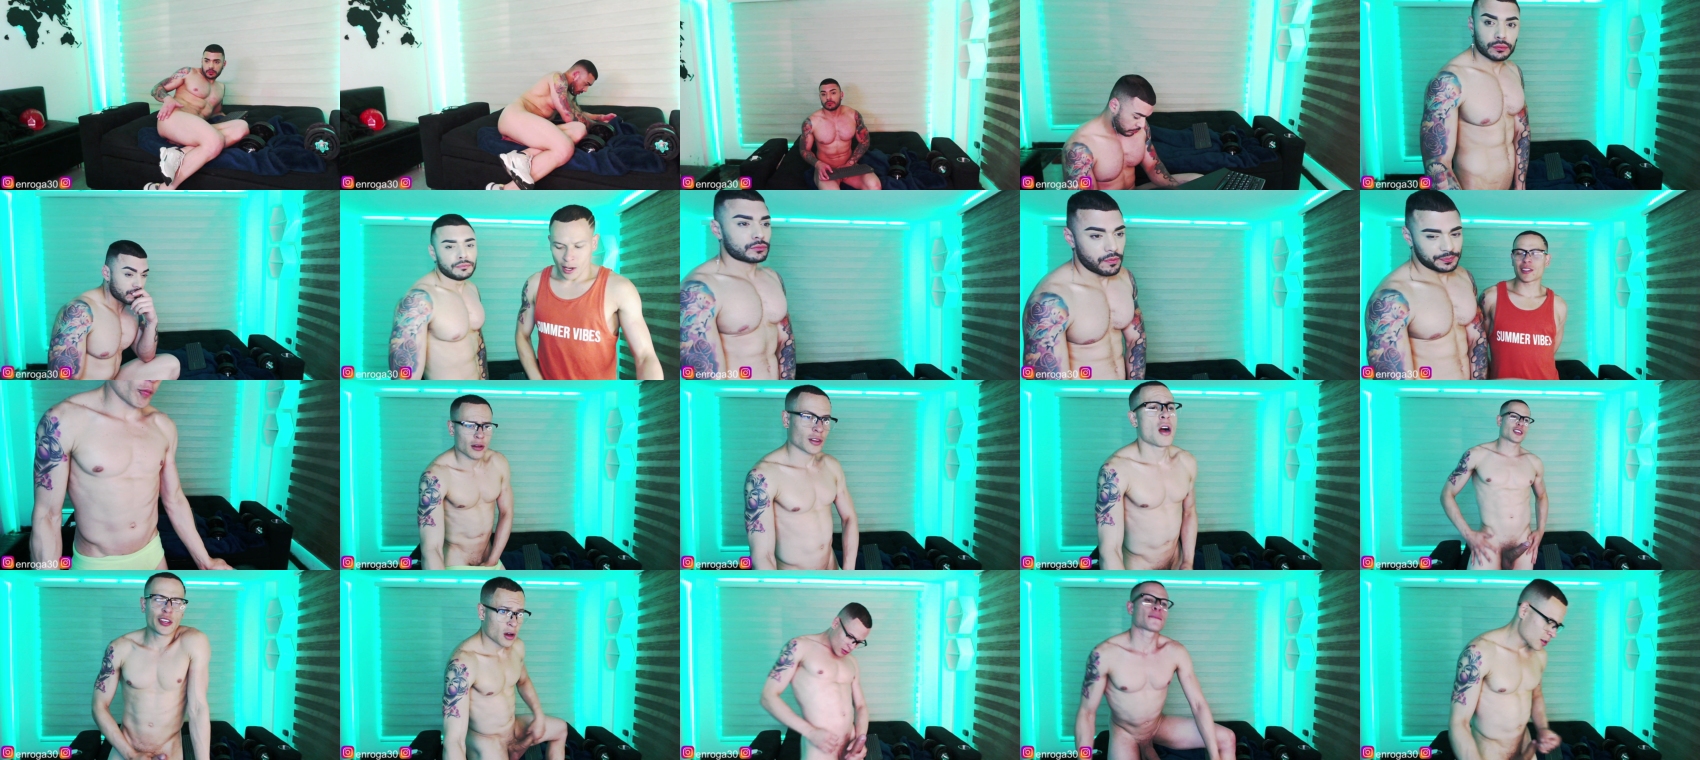 jeff_olsen  09-02-2022 video sexybody